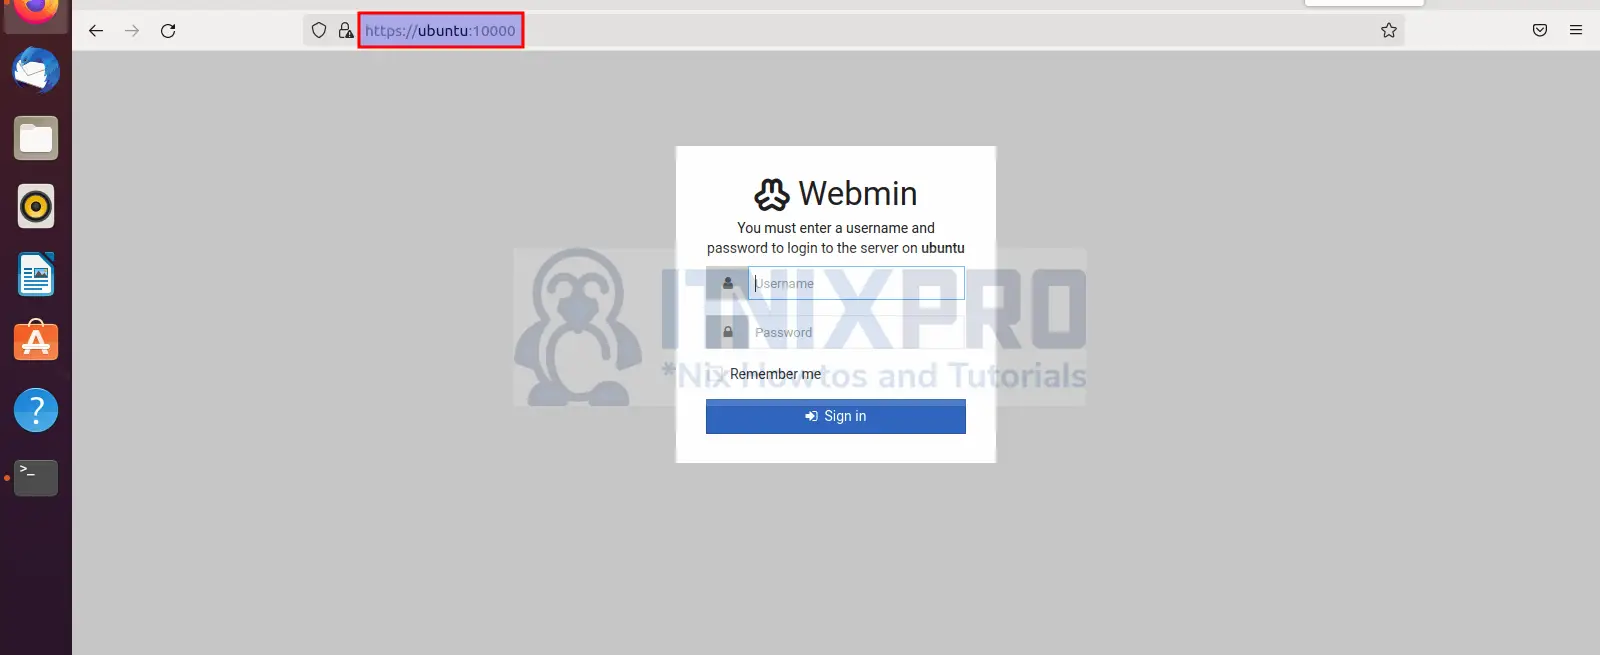 Install Webmin on Ubuntu 22.04